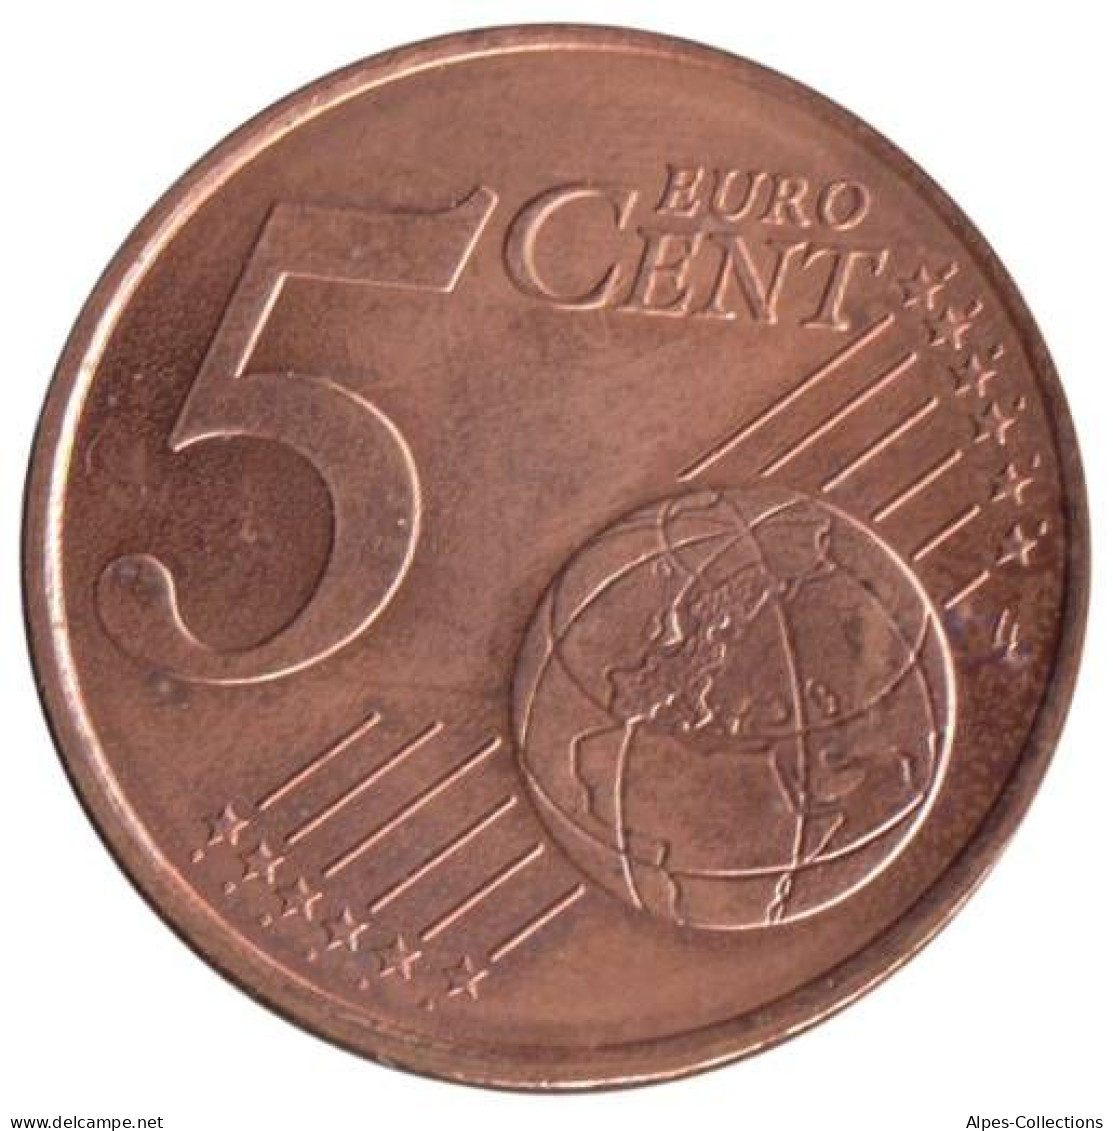 FR00502.1 - FRANCE - 5 Cents - 2002 - Francia